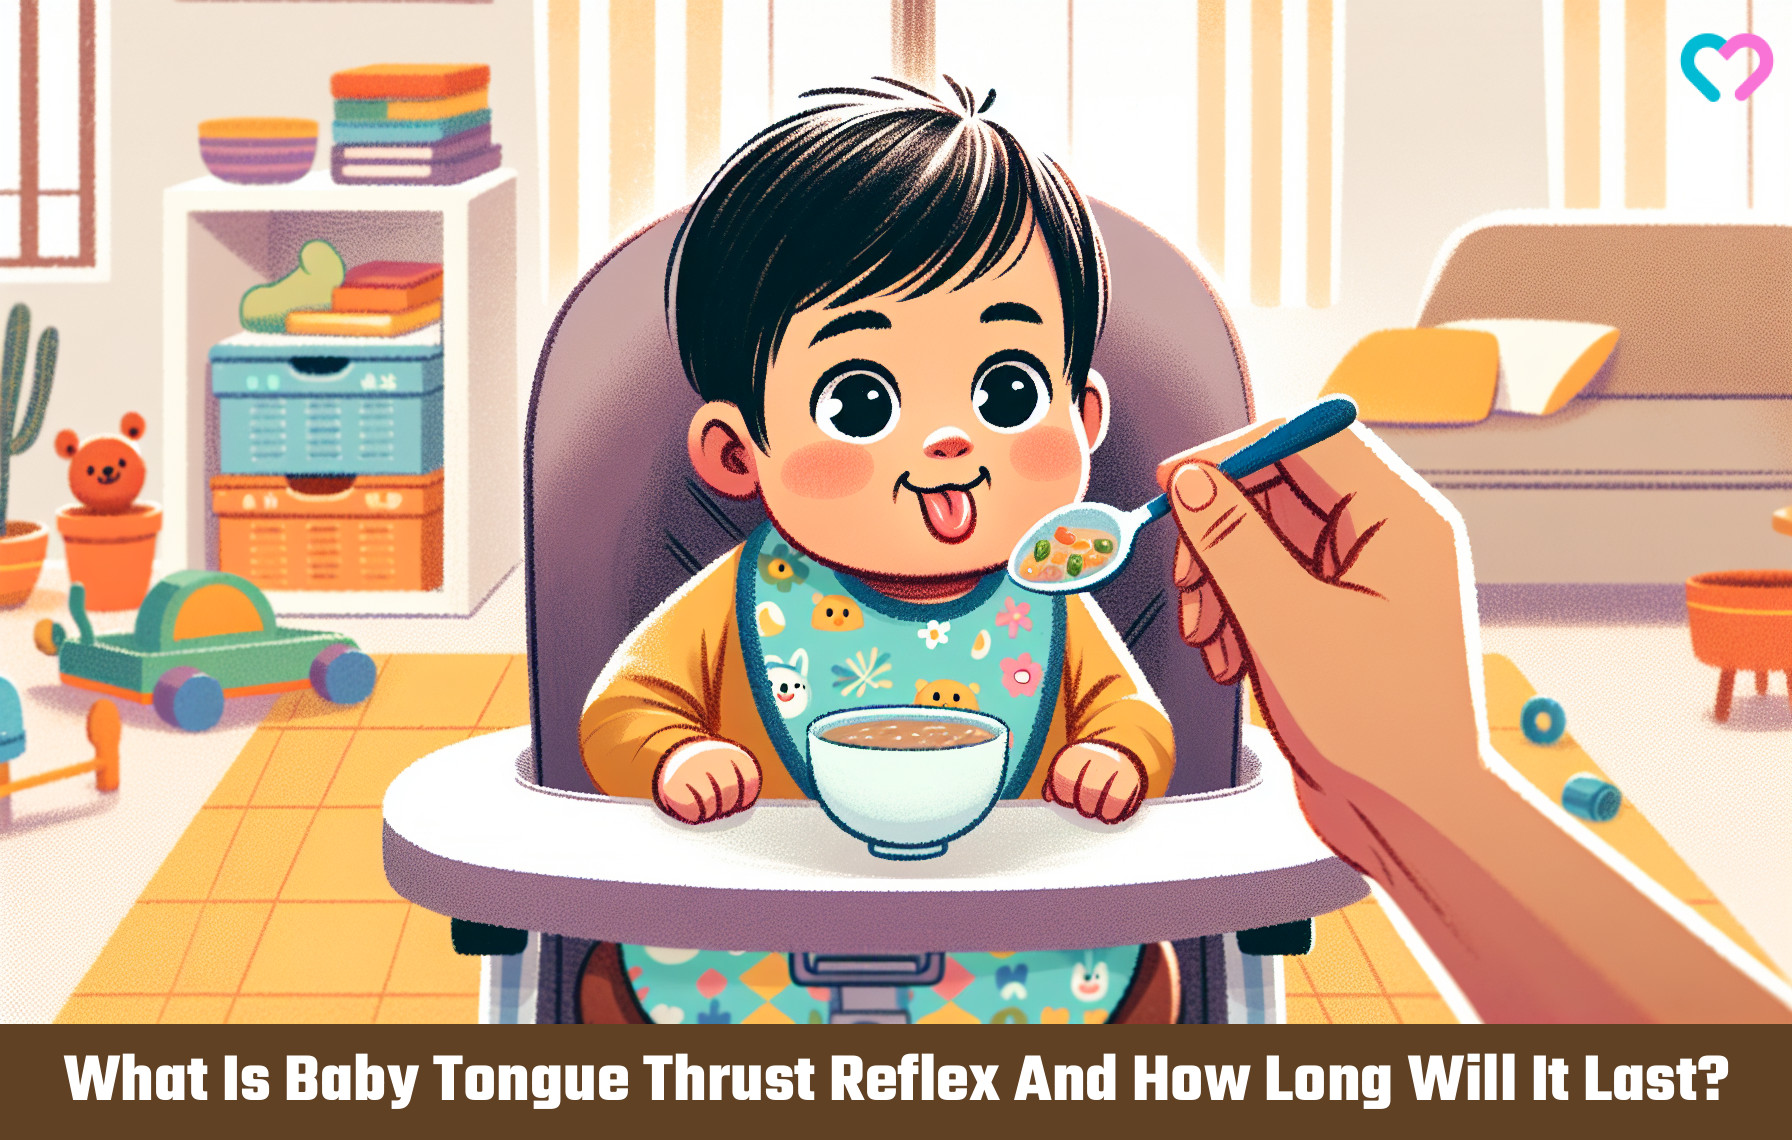 tongue thrust reflex For Kids_illustration